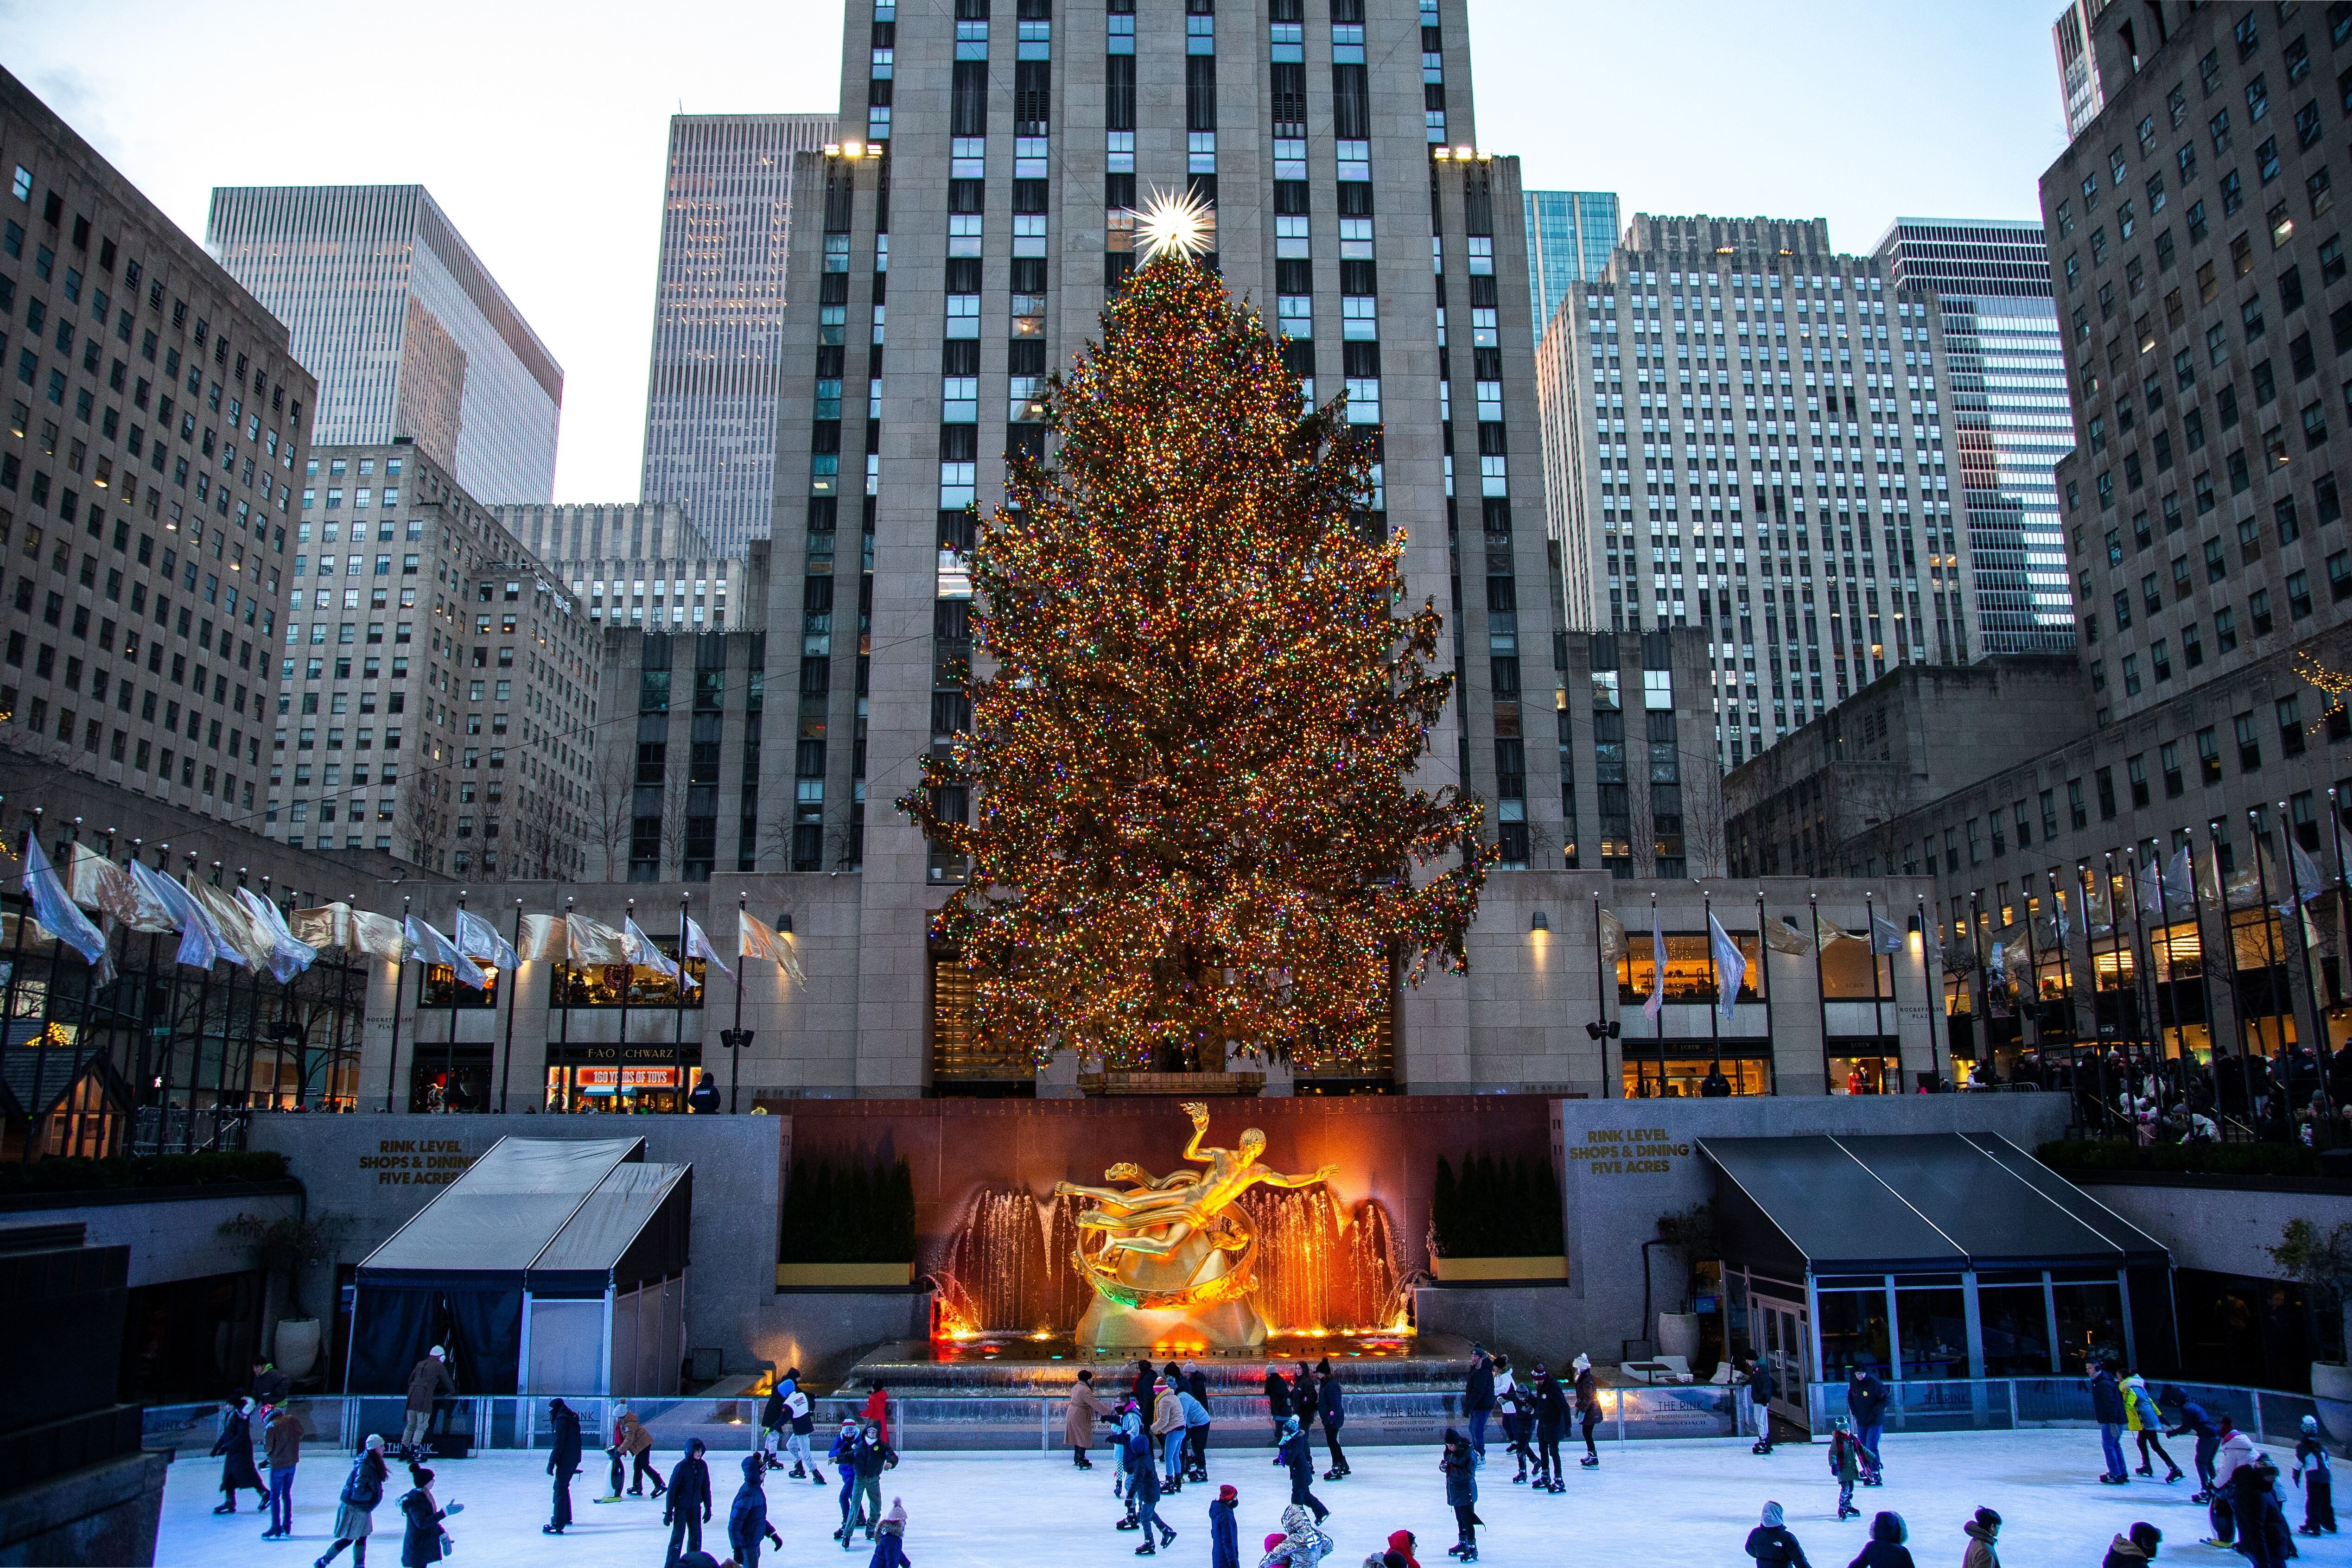 Photo of the Rockefeller Center Christmas Tree by Kaydn Ito via Unsplash